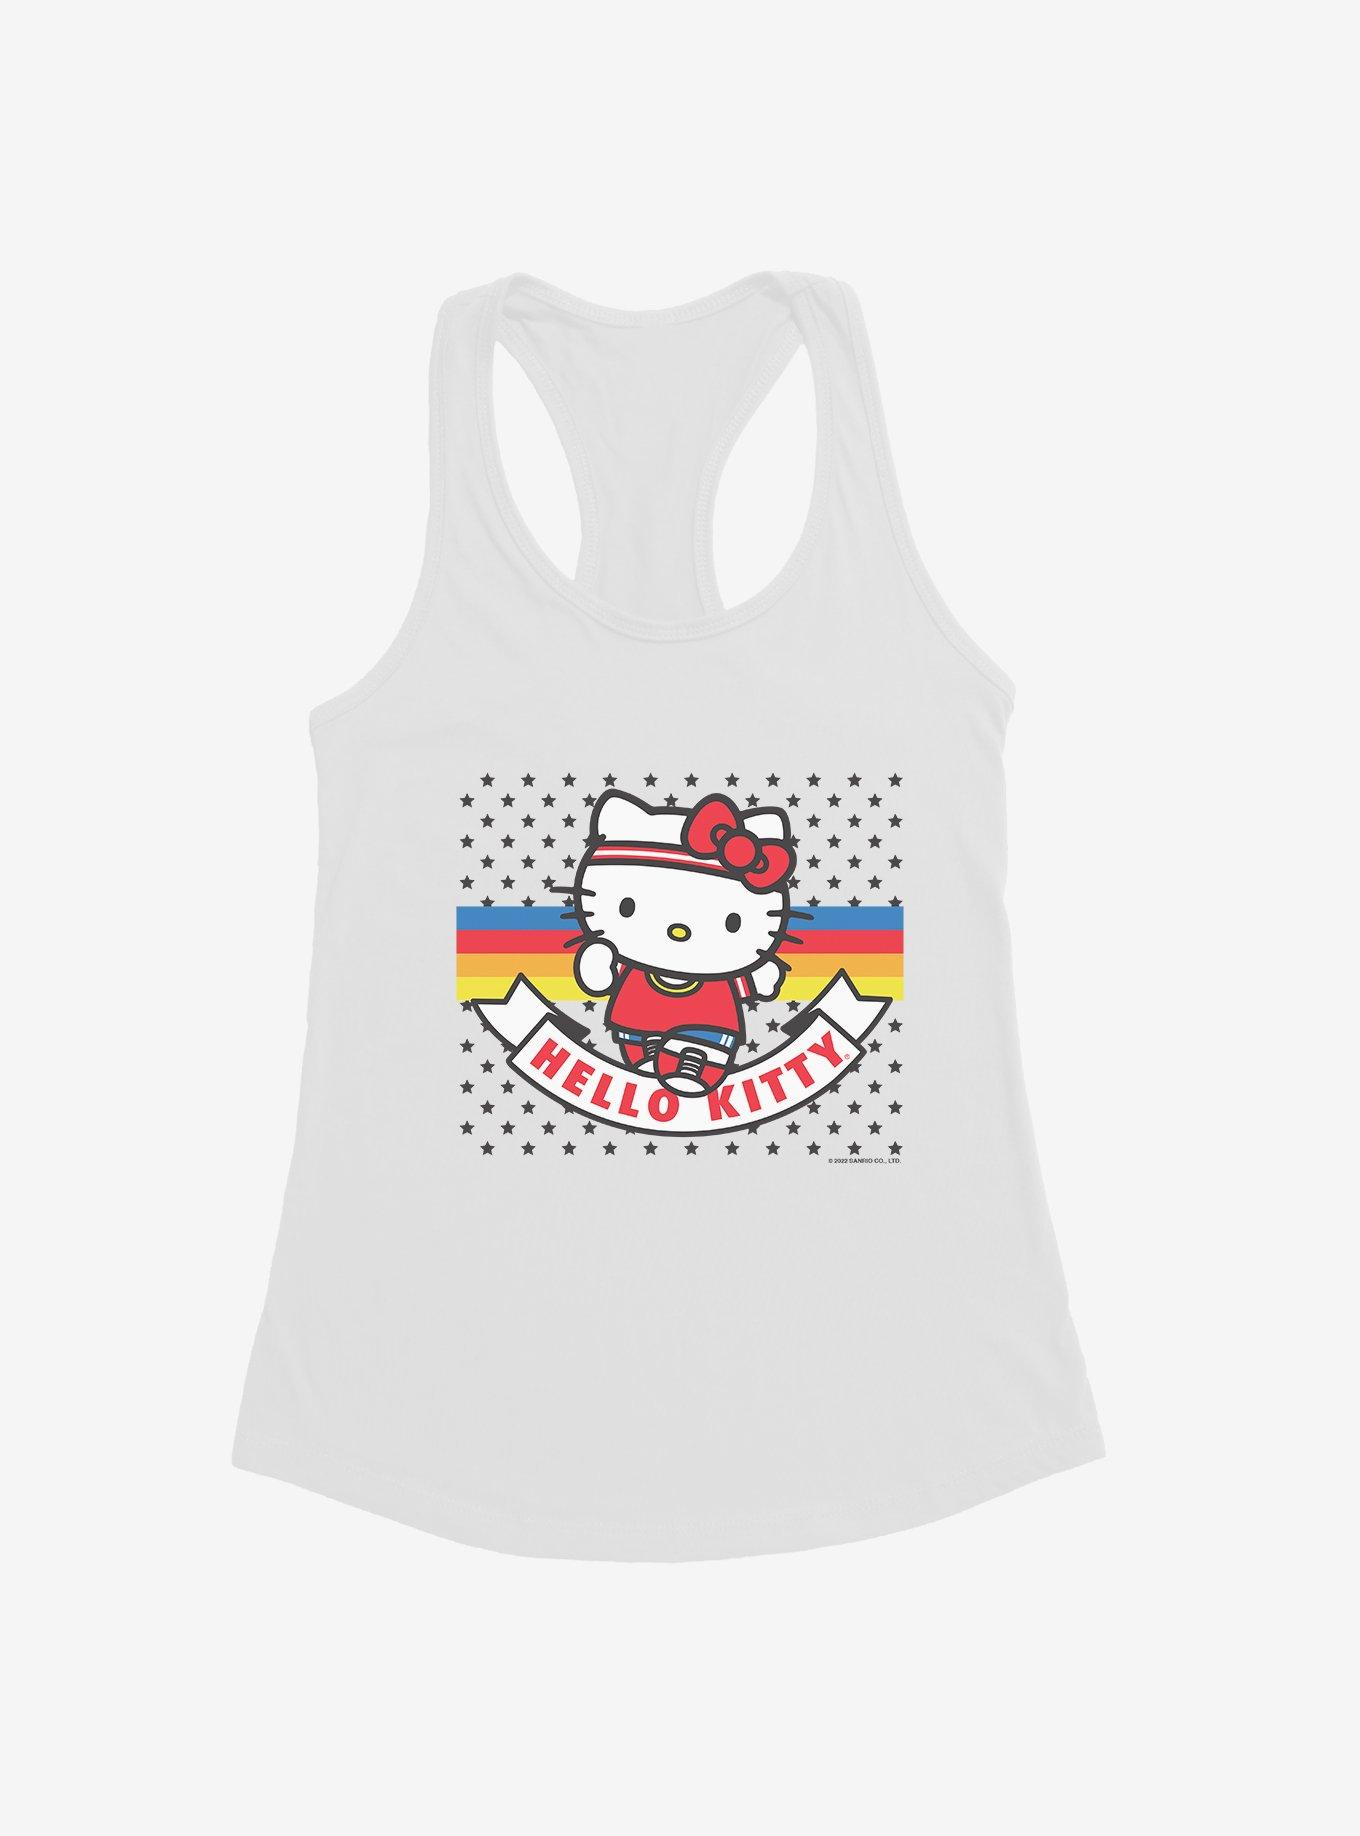 Hello Kitty Sports & Dots Girls Tank, WHITE, hi-res